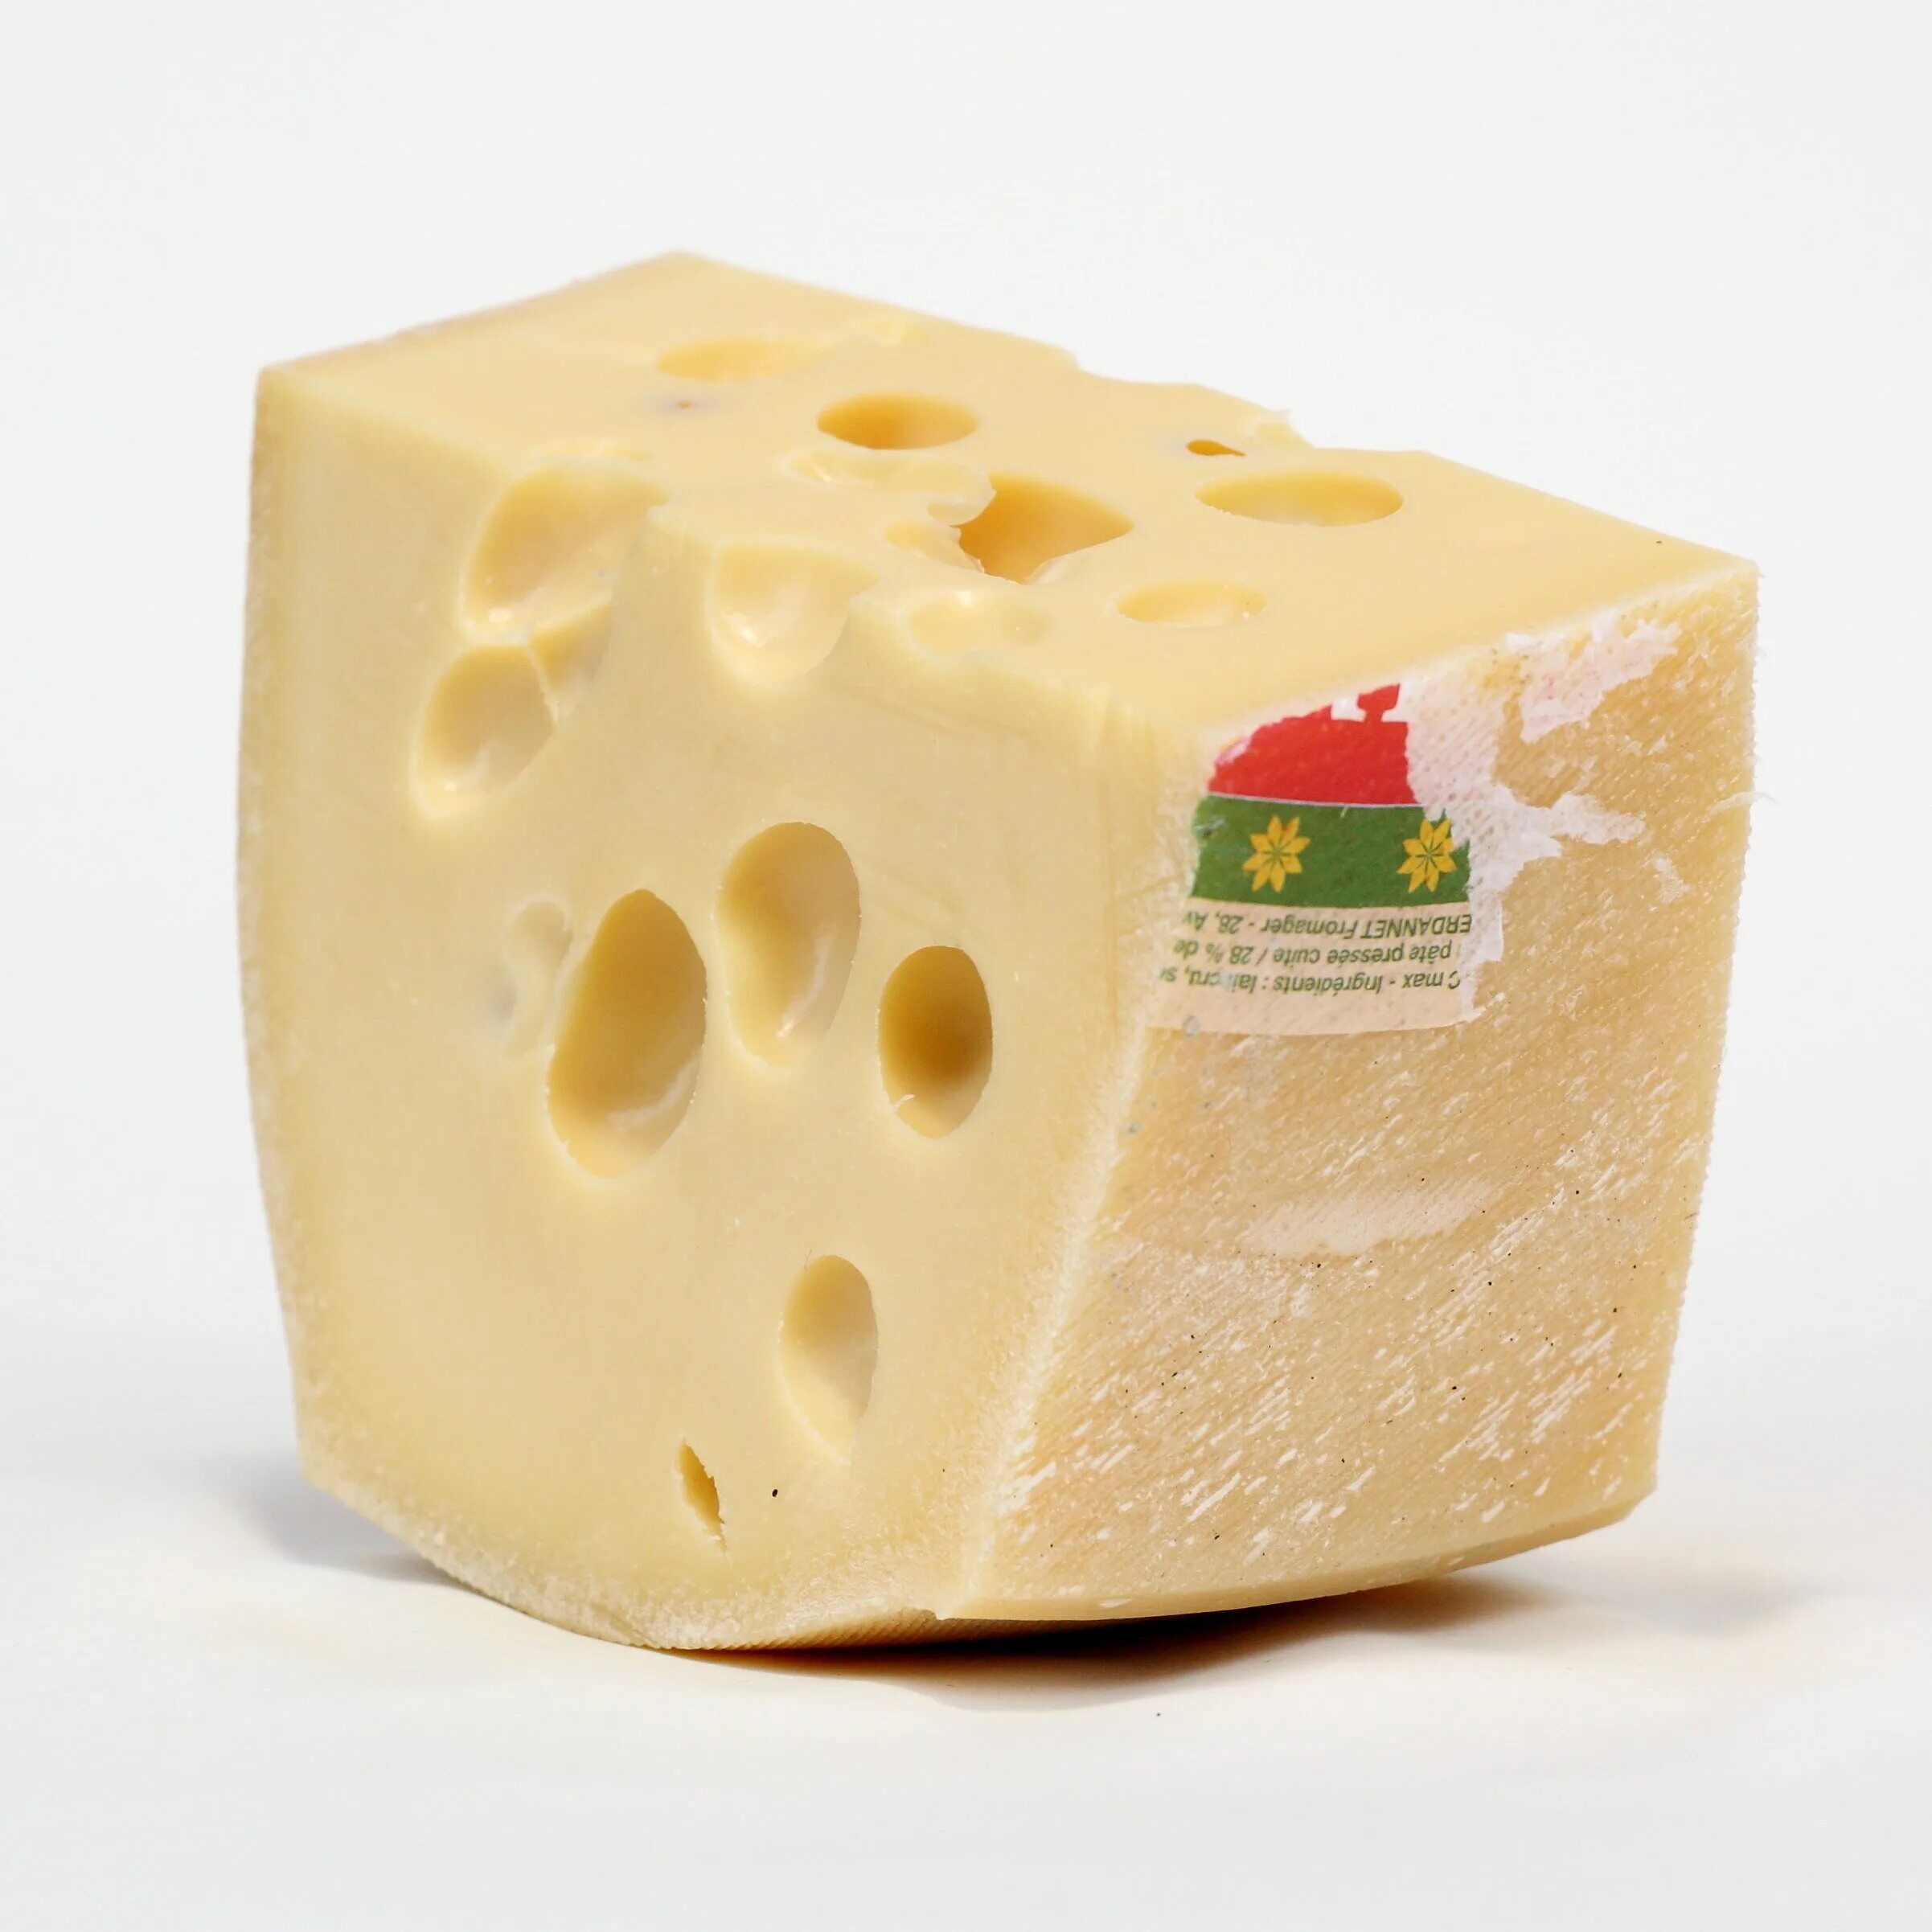 Сыр Эмменталь Франция. Швейцарский сыр Эмменталь. Сен-Нектер (сыр). Королевский сыр Эмменталь.